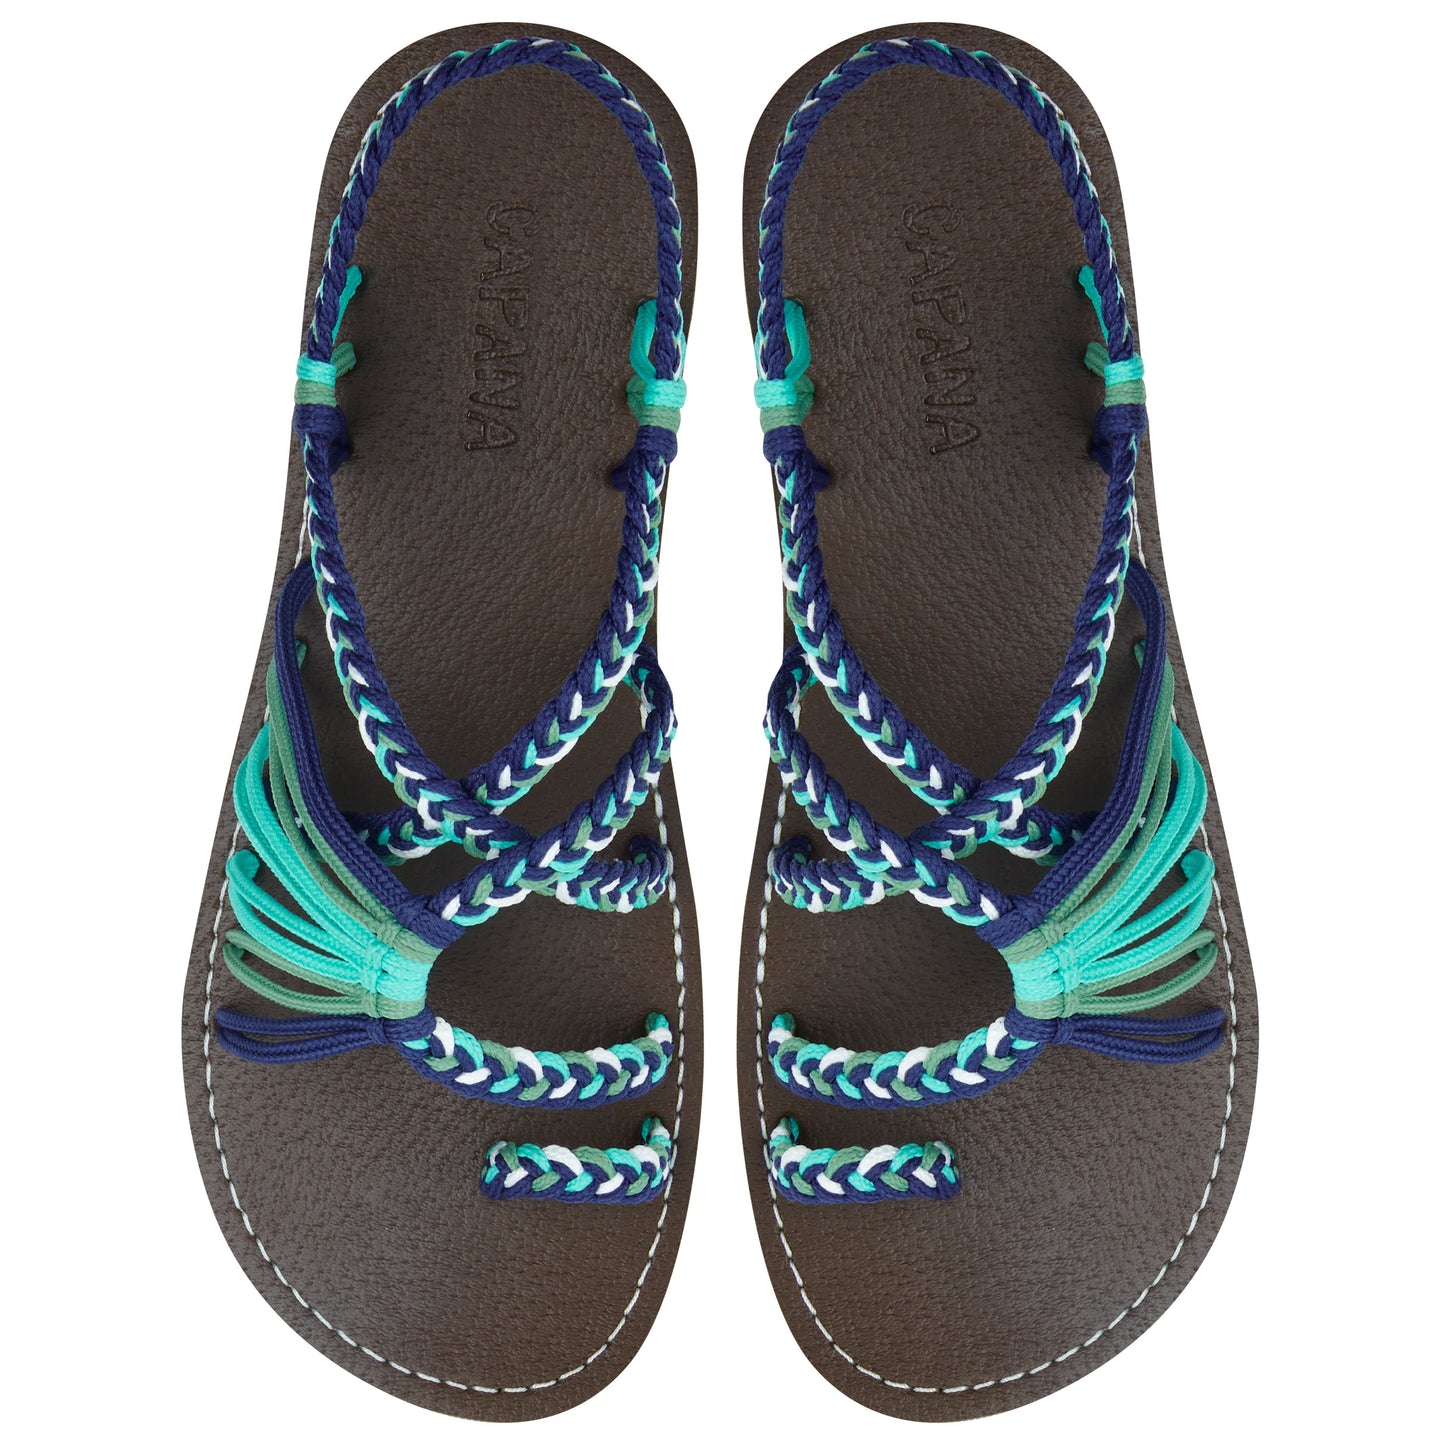 Commune Marine Pistachio Rope Sandals Blue Green loop design Flat sandals for women